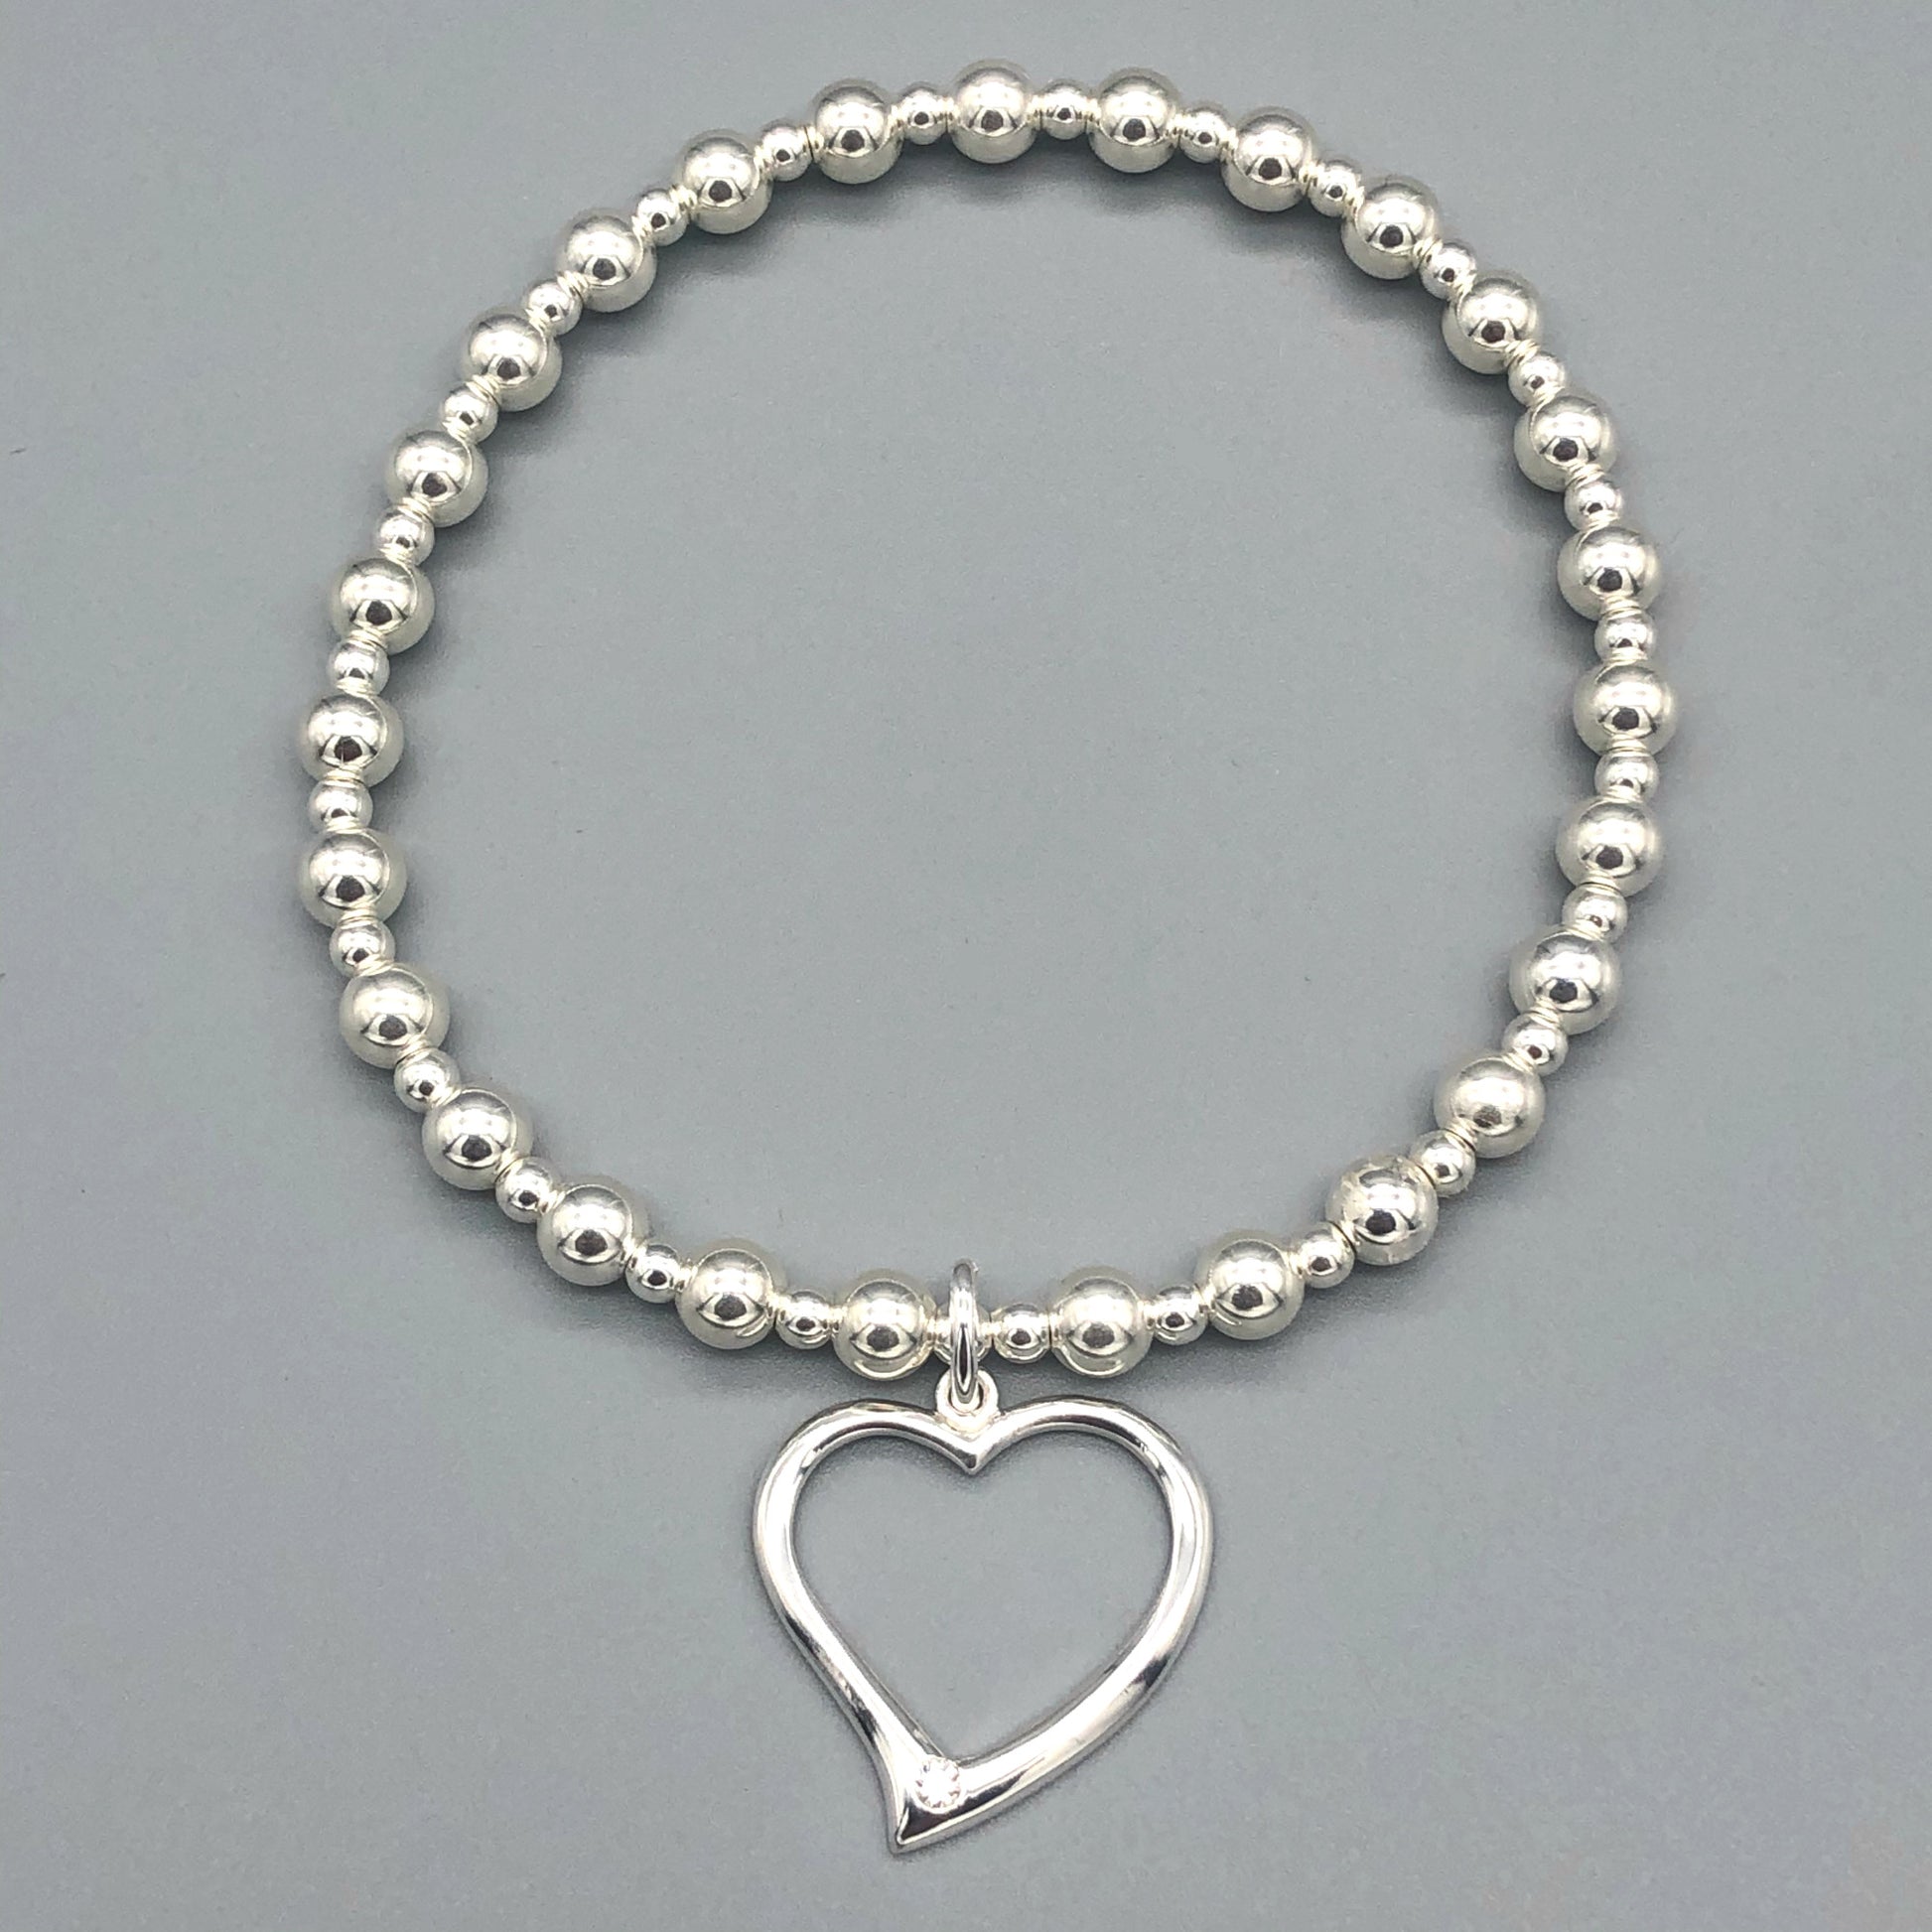 Open heart charm women's sterling silver stacking bracelet by My Silver Wish